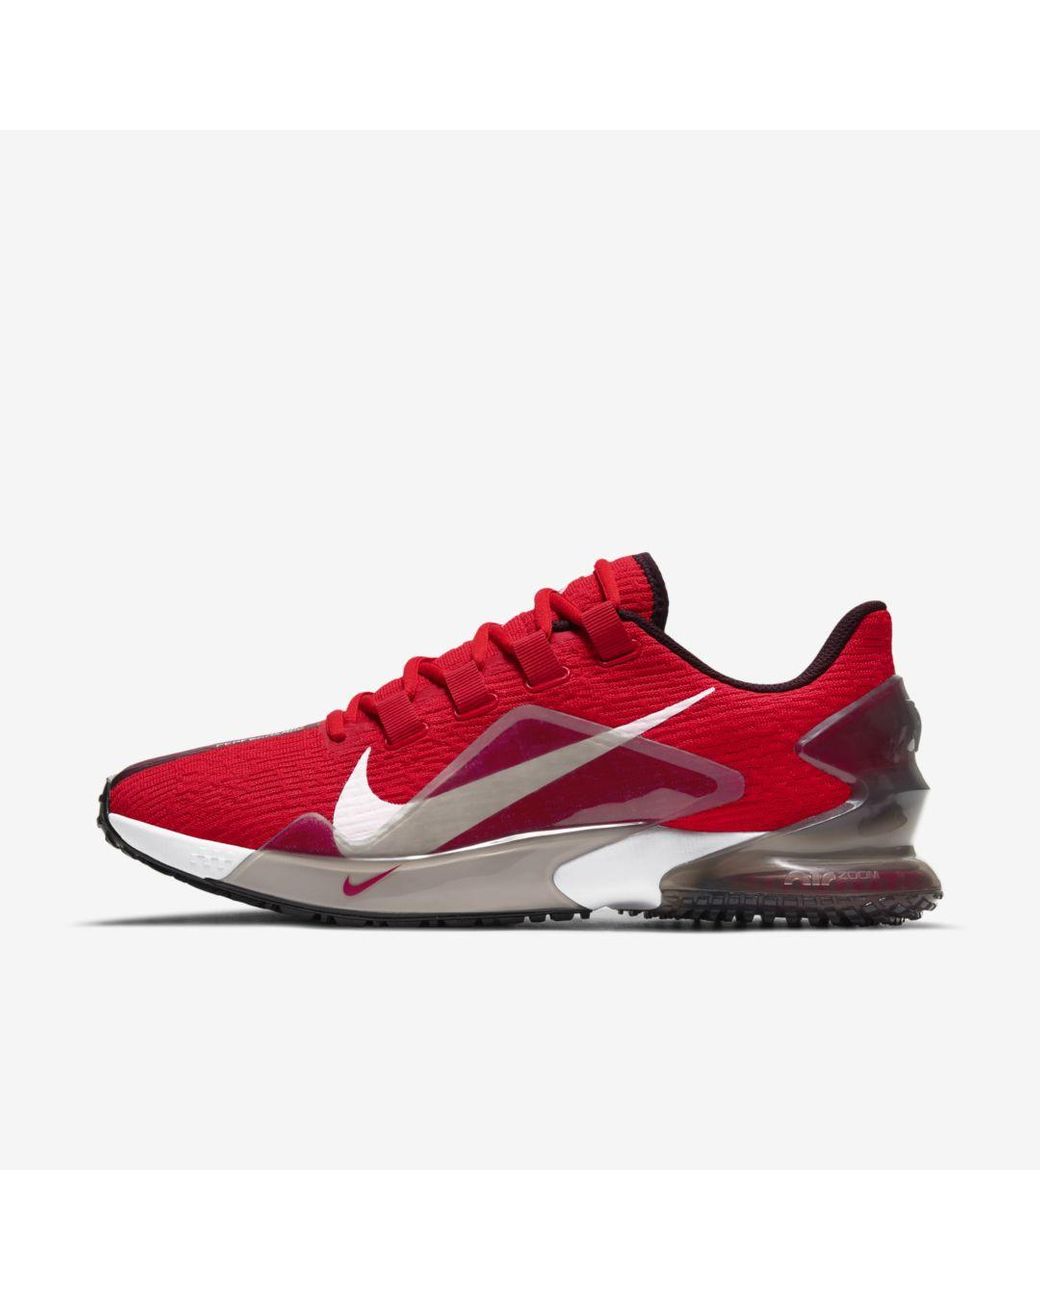 Nike Force Zoom Trout 7 Turf Baseball Shoe in University Red,Black